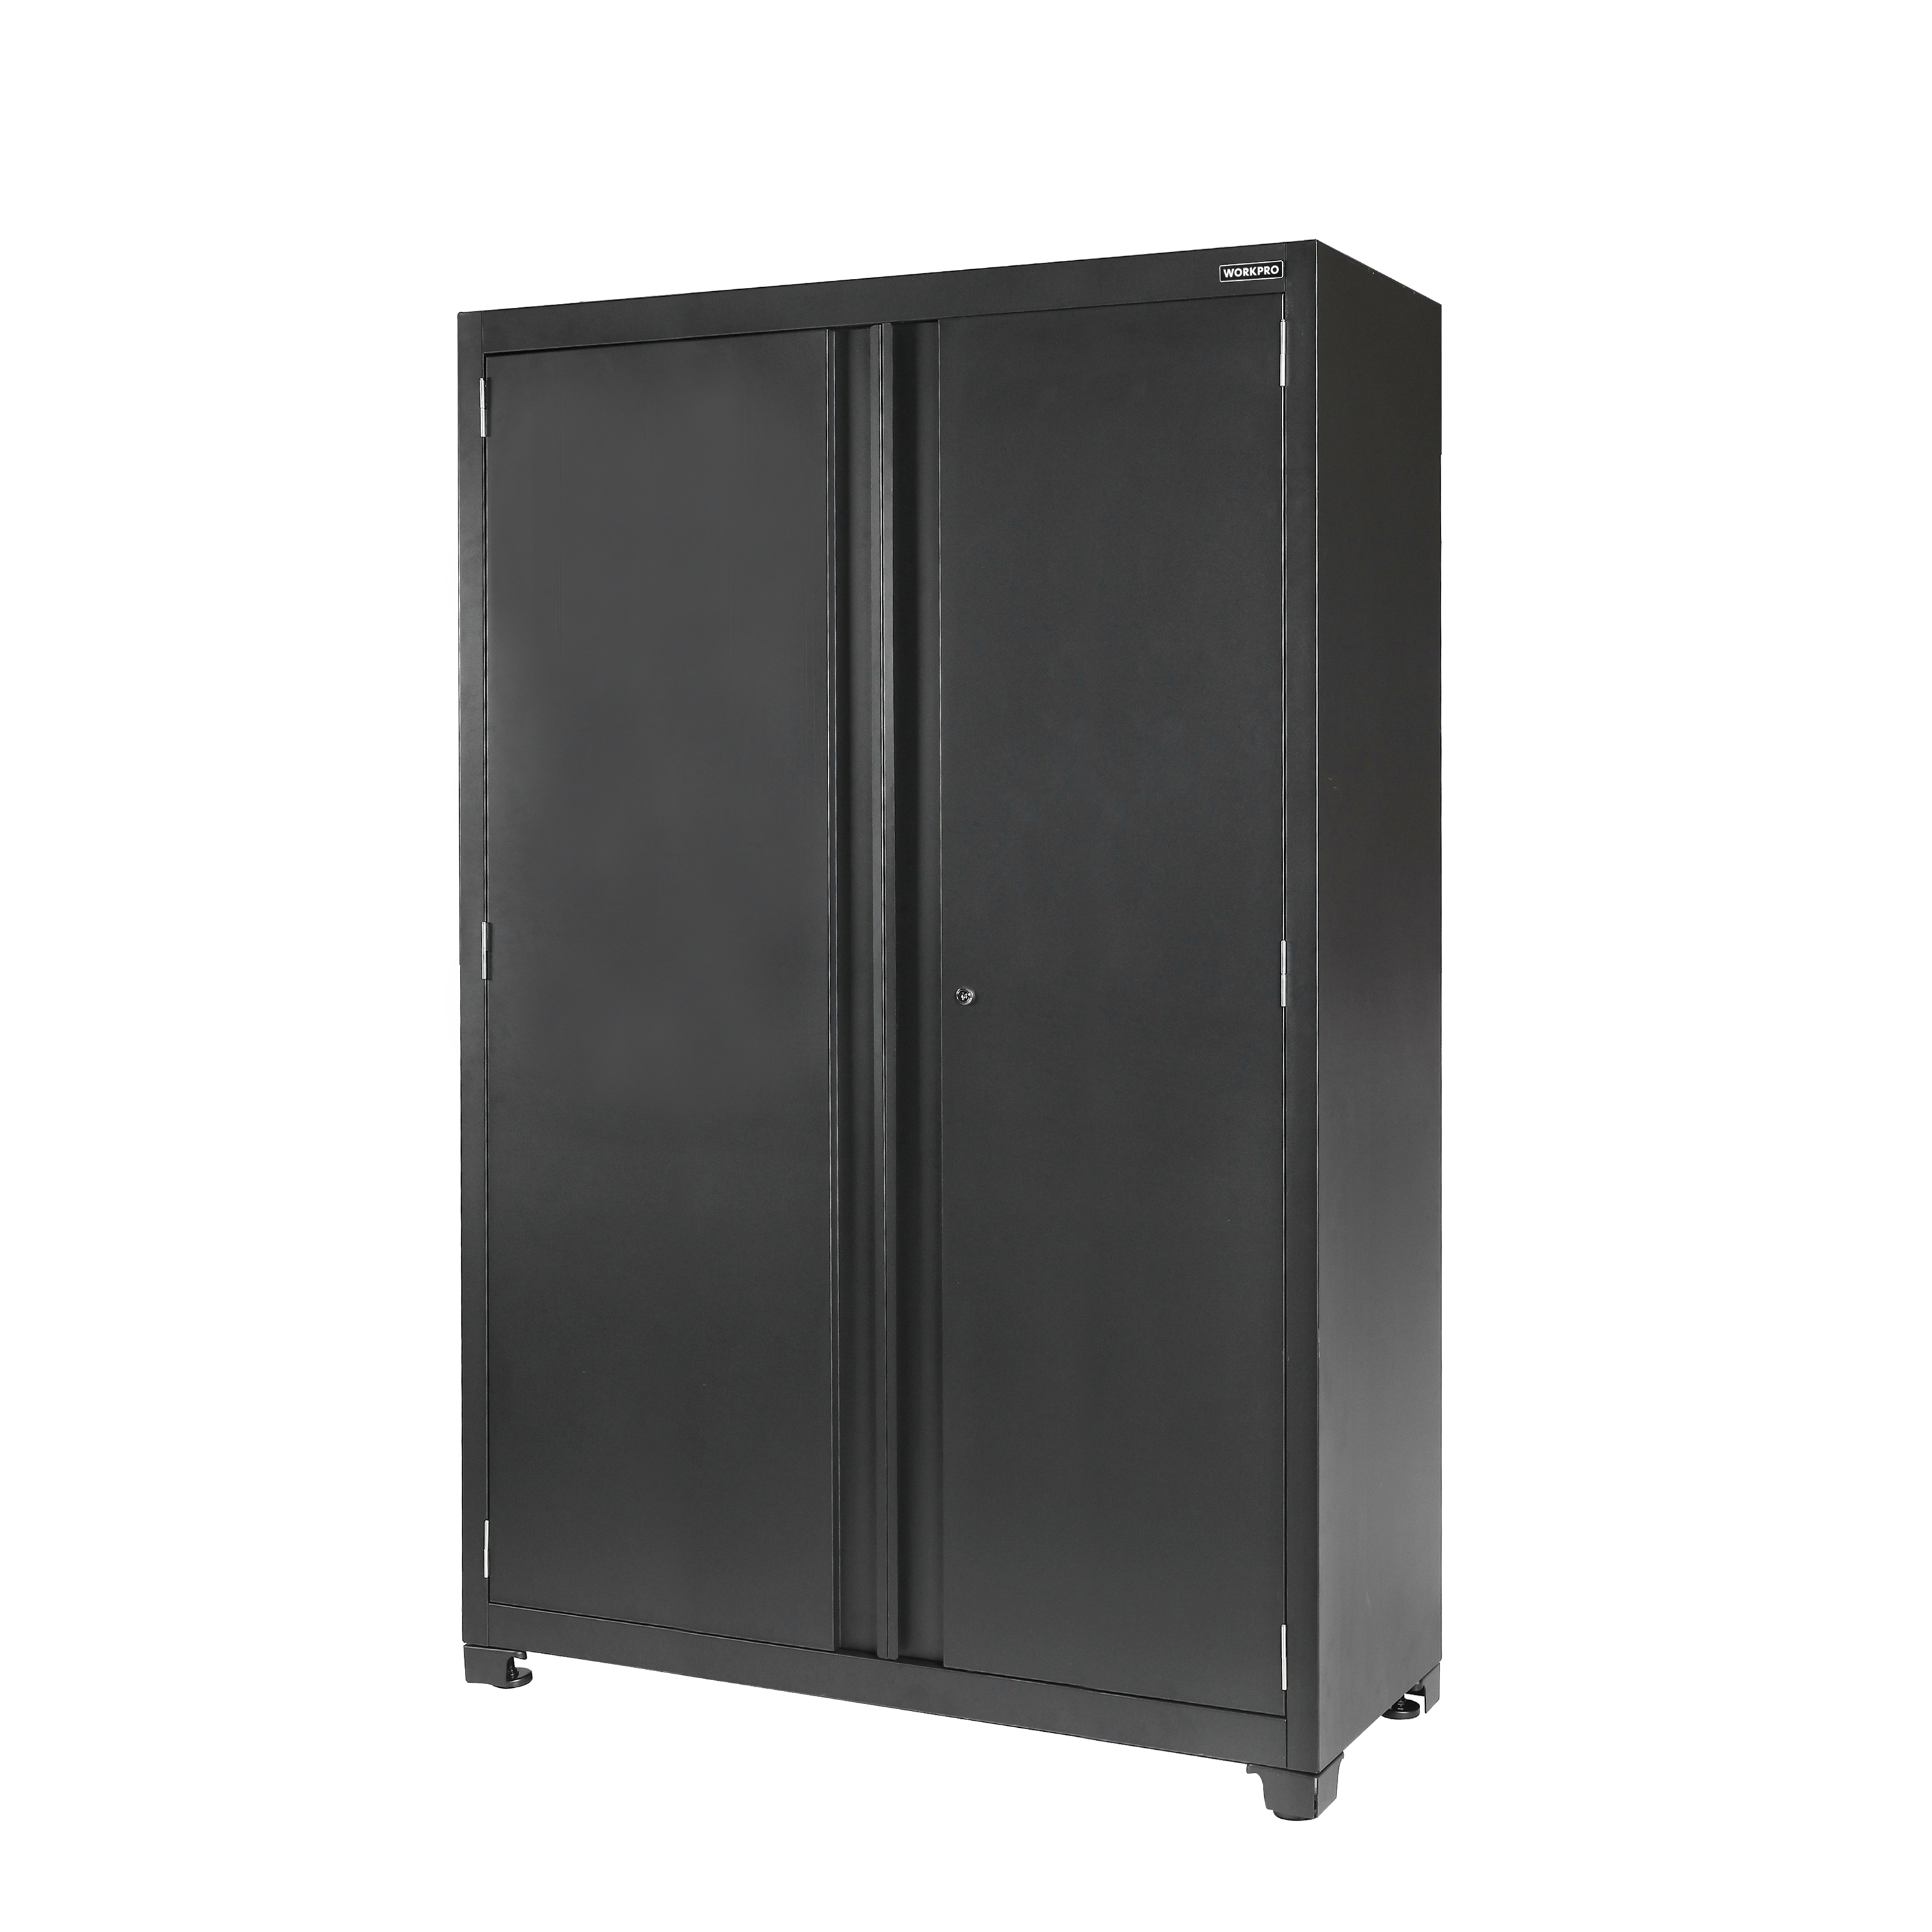 WORKPRO 48-inch Heavy-Duty Garage Storage Cabinet, 3 Shelves, Black, Metal - Walmart.com $299